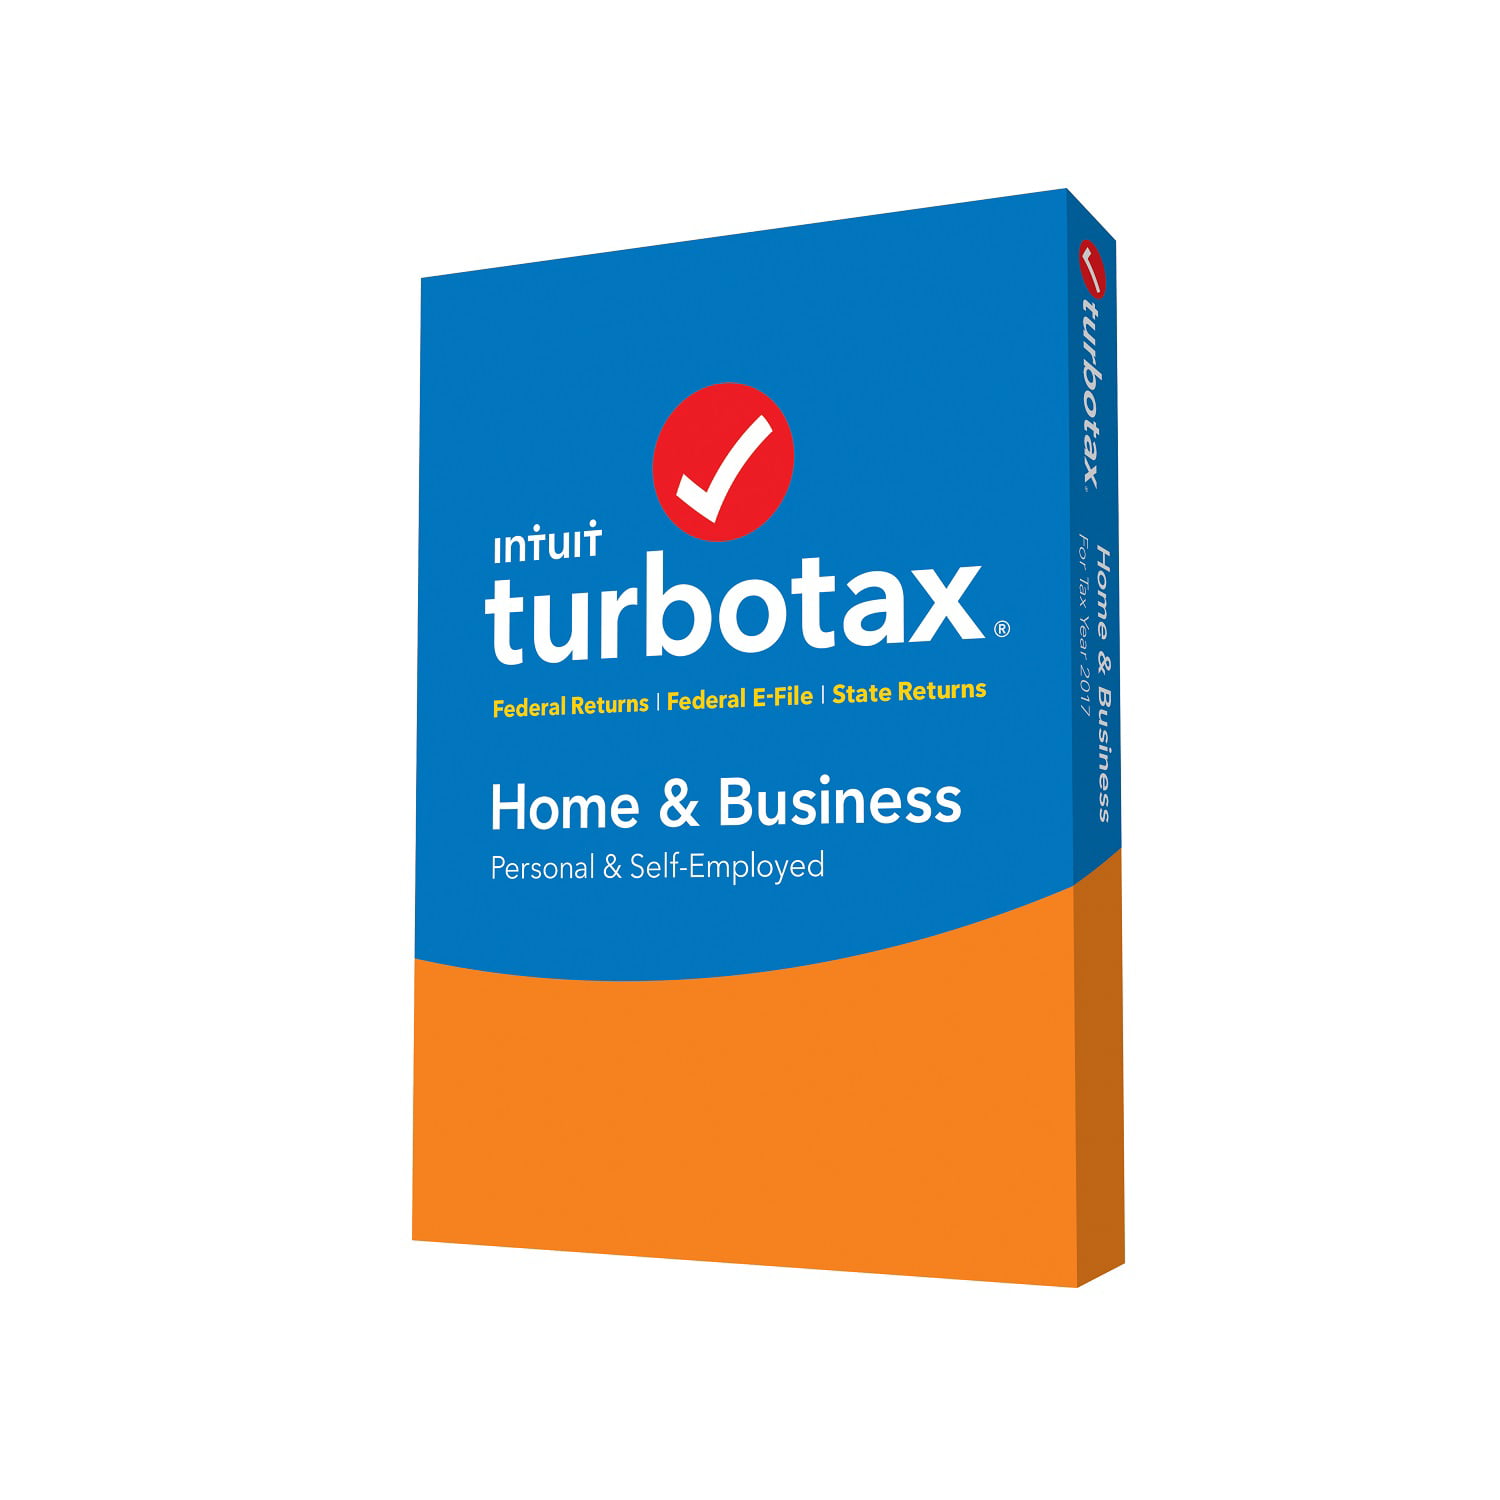 turbotax-home-and-business-mokasinwarehouse